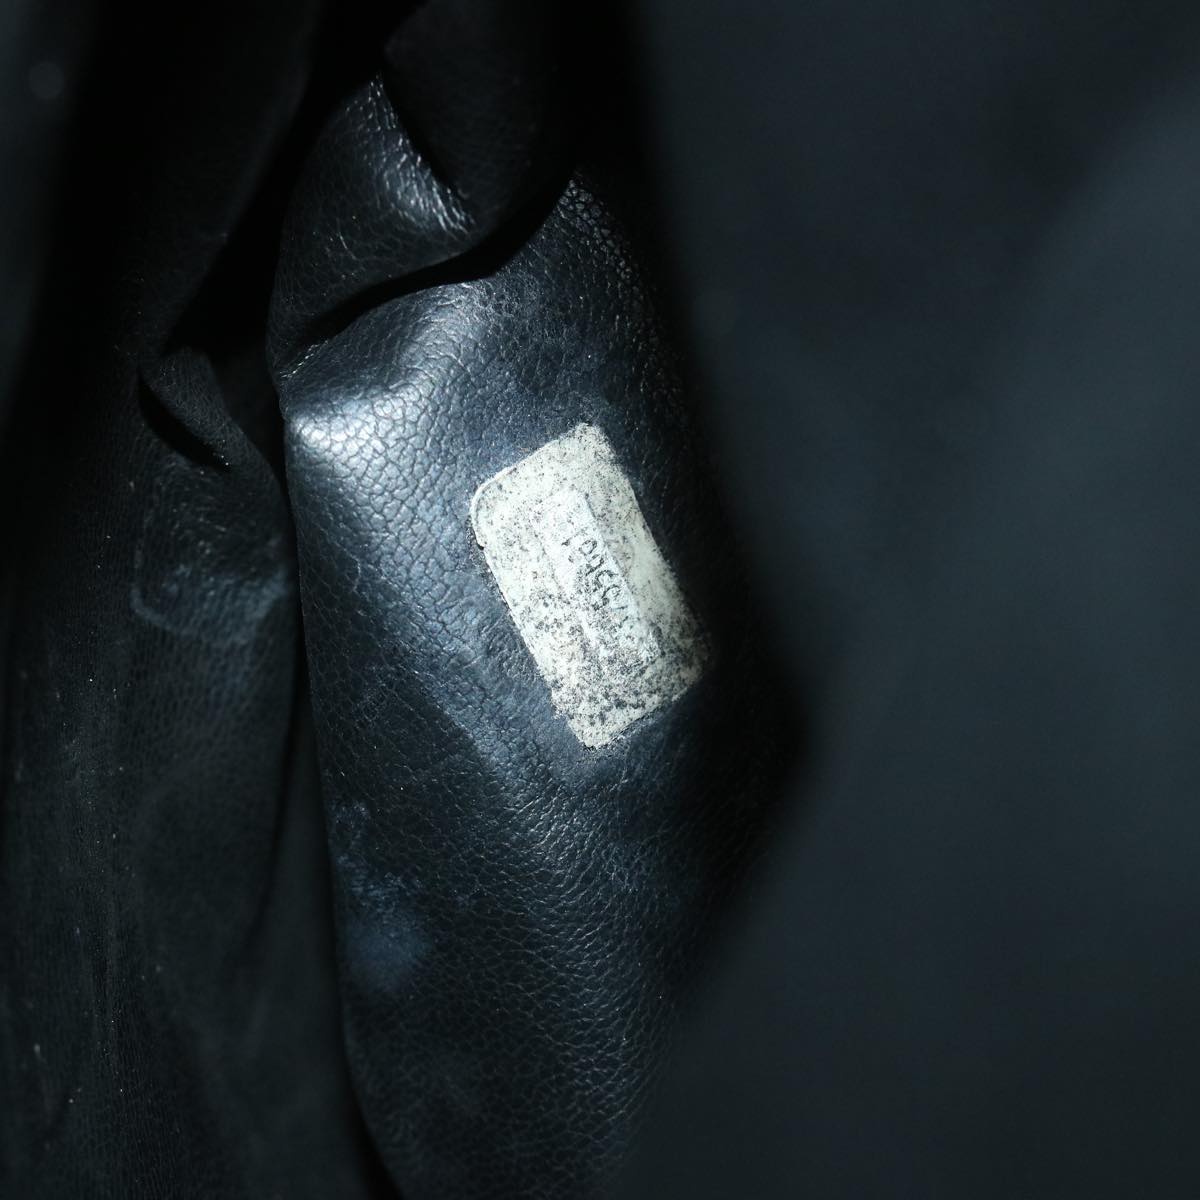 CHANEL Chain Shoulder Bag Patent leather Black CC Auth bs10115